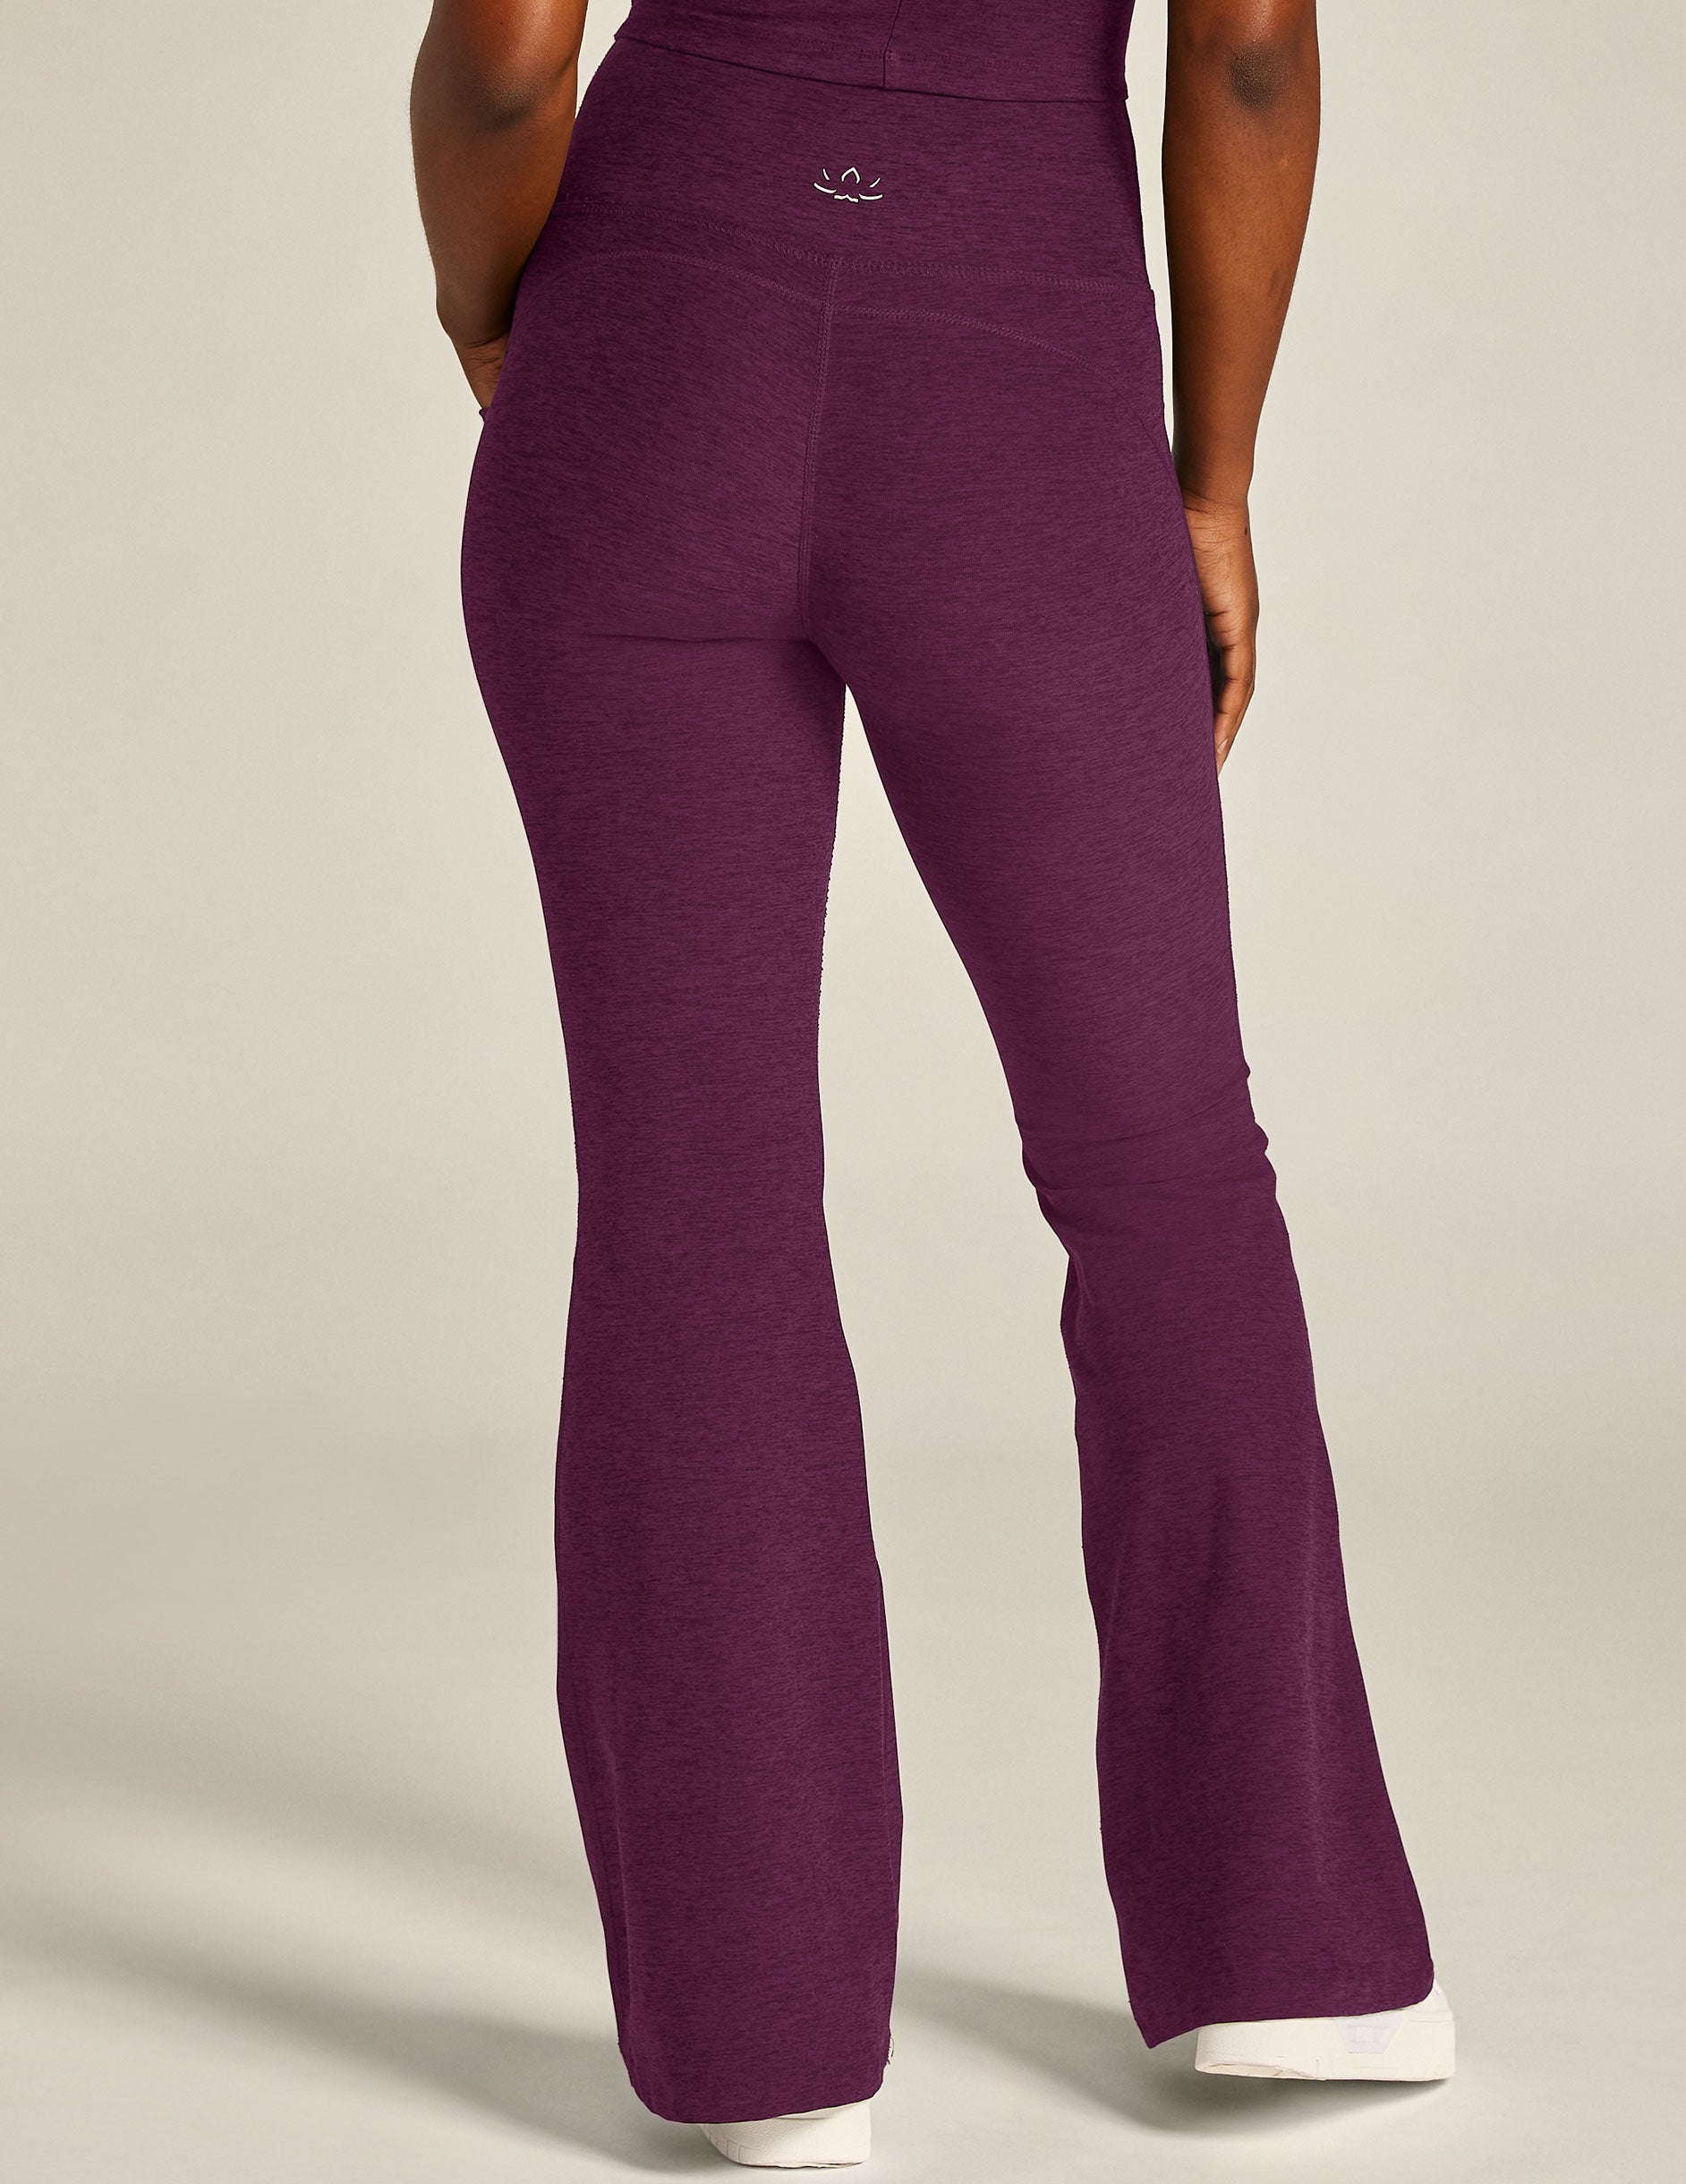 Women's Savvi High Waist Capri Yoga Pants Size S Small Athletic Purple  #1118